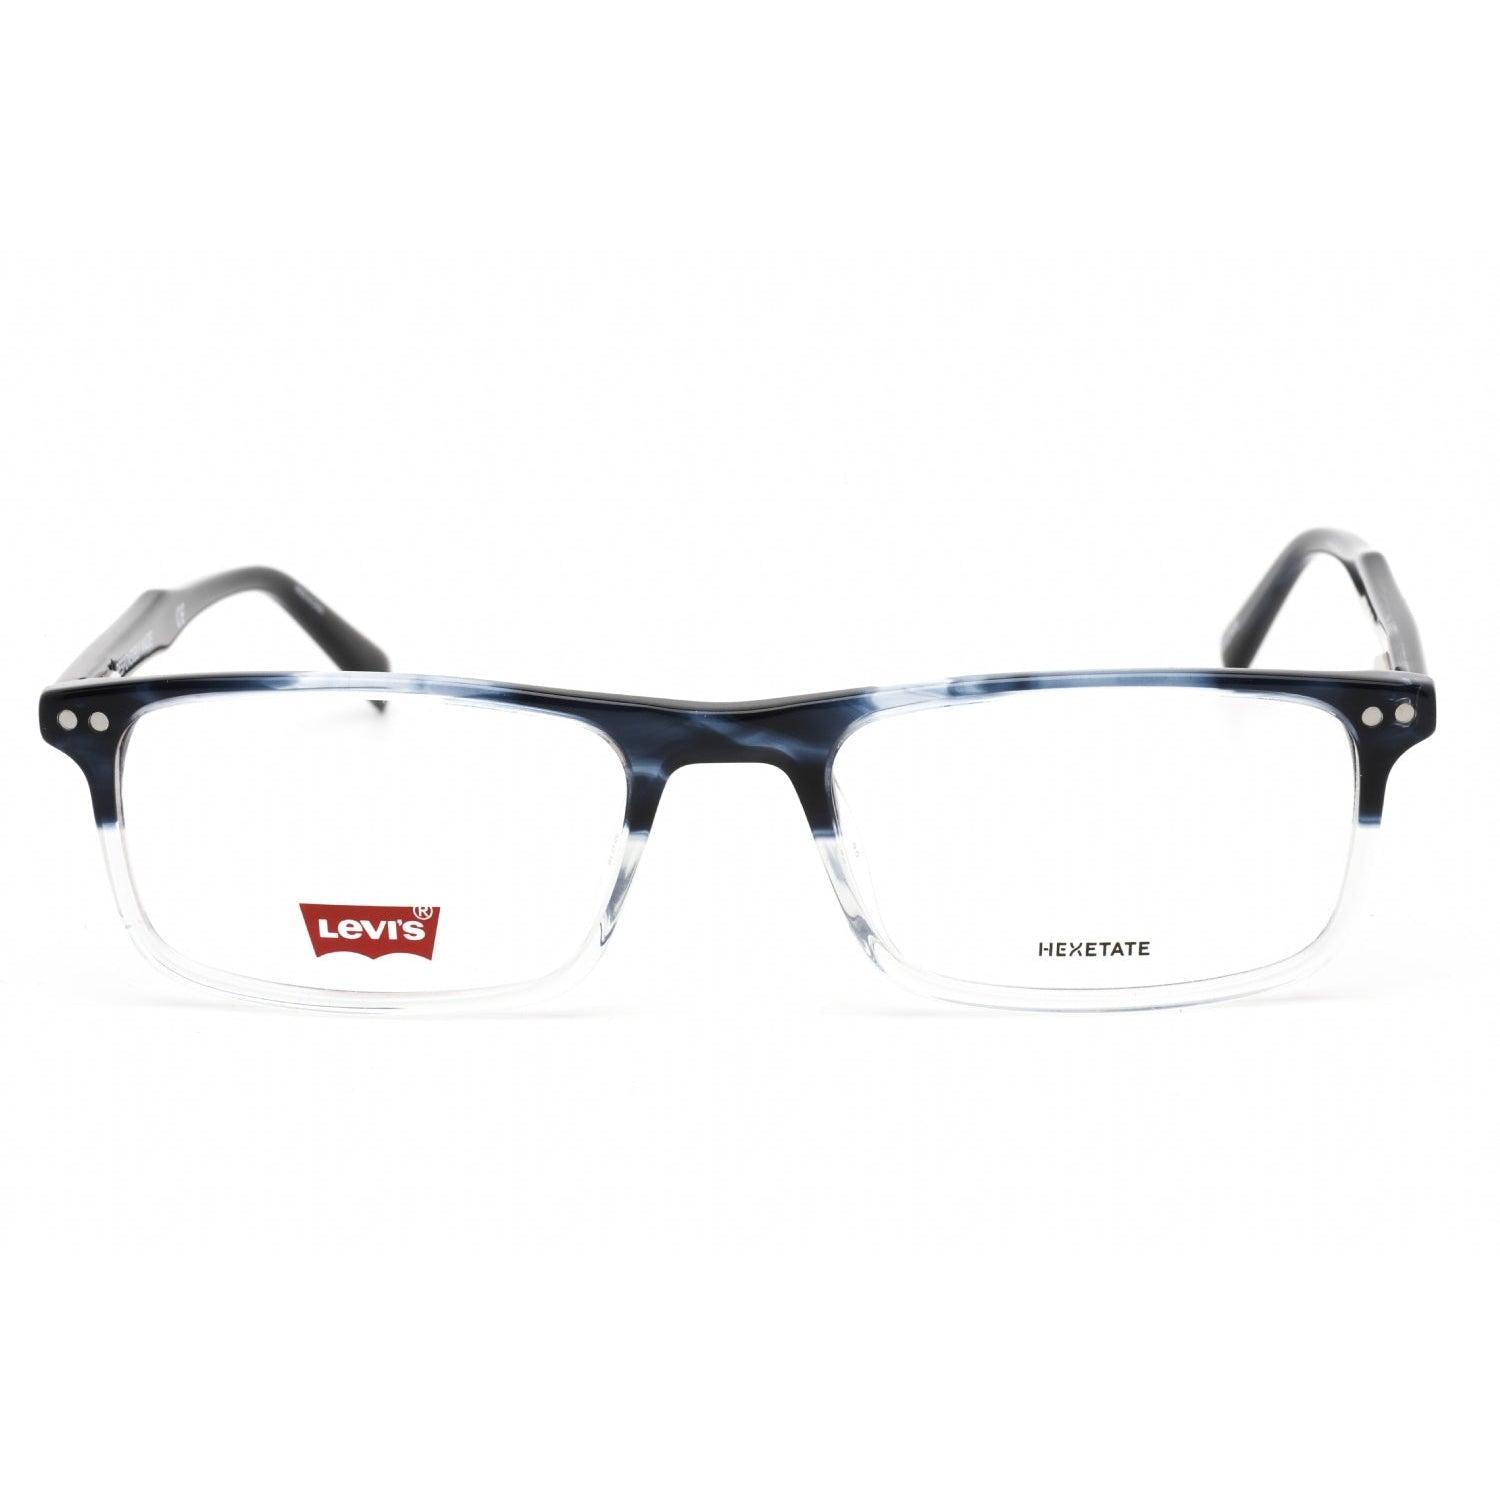 Levi's Lv 5000 Eyeglasses Black Ruthenium/clear Demo Lens in Brown